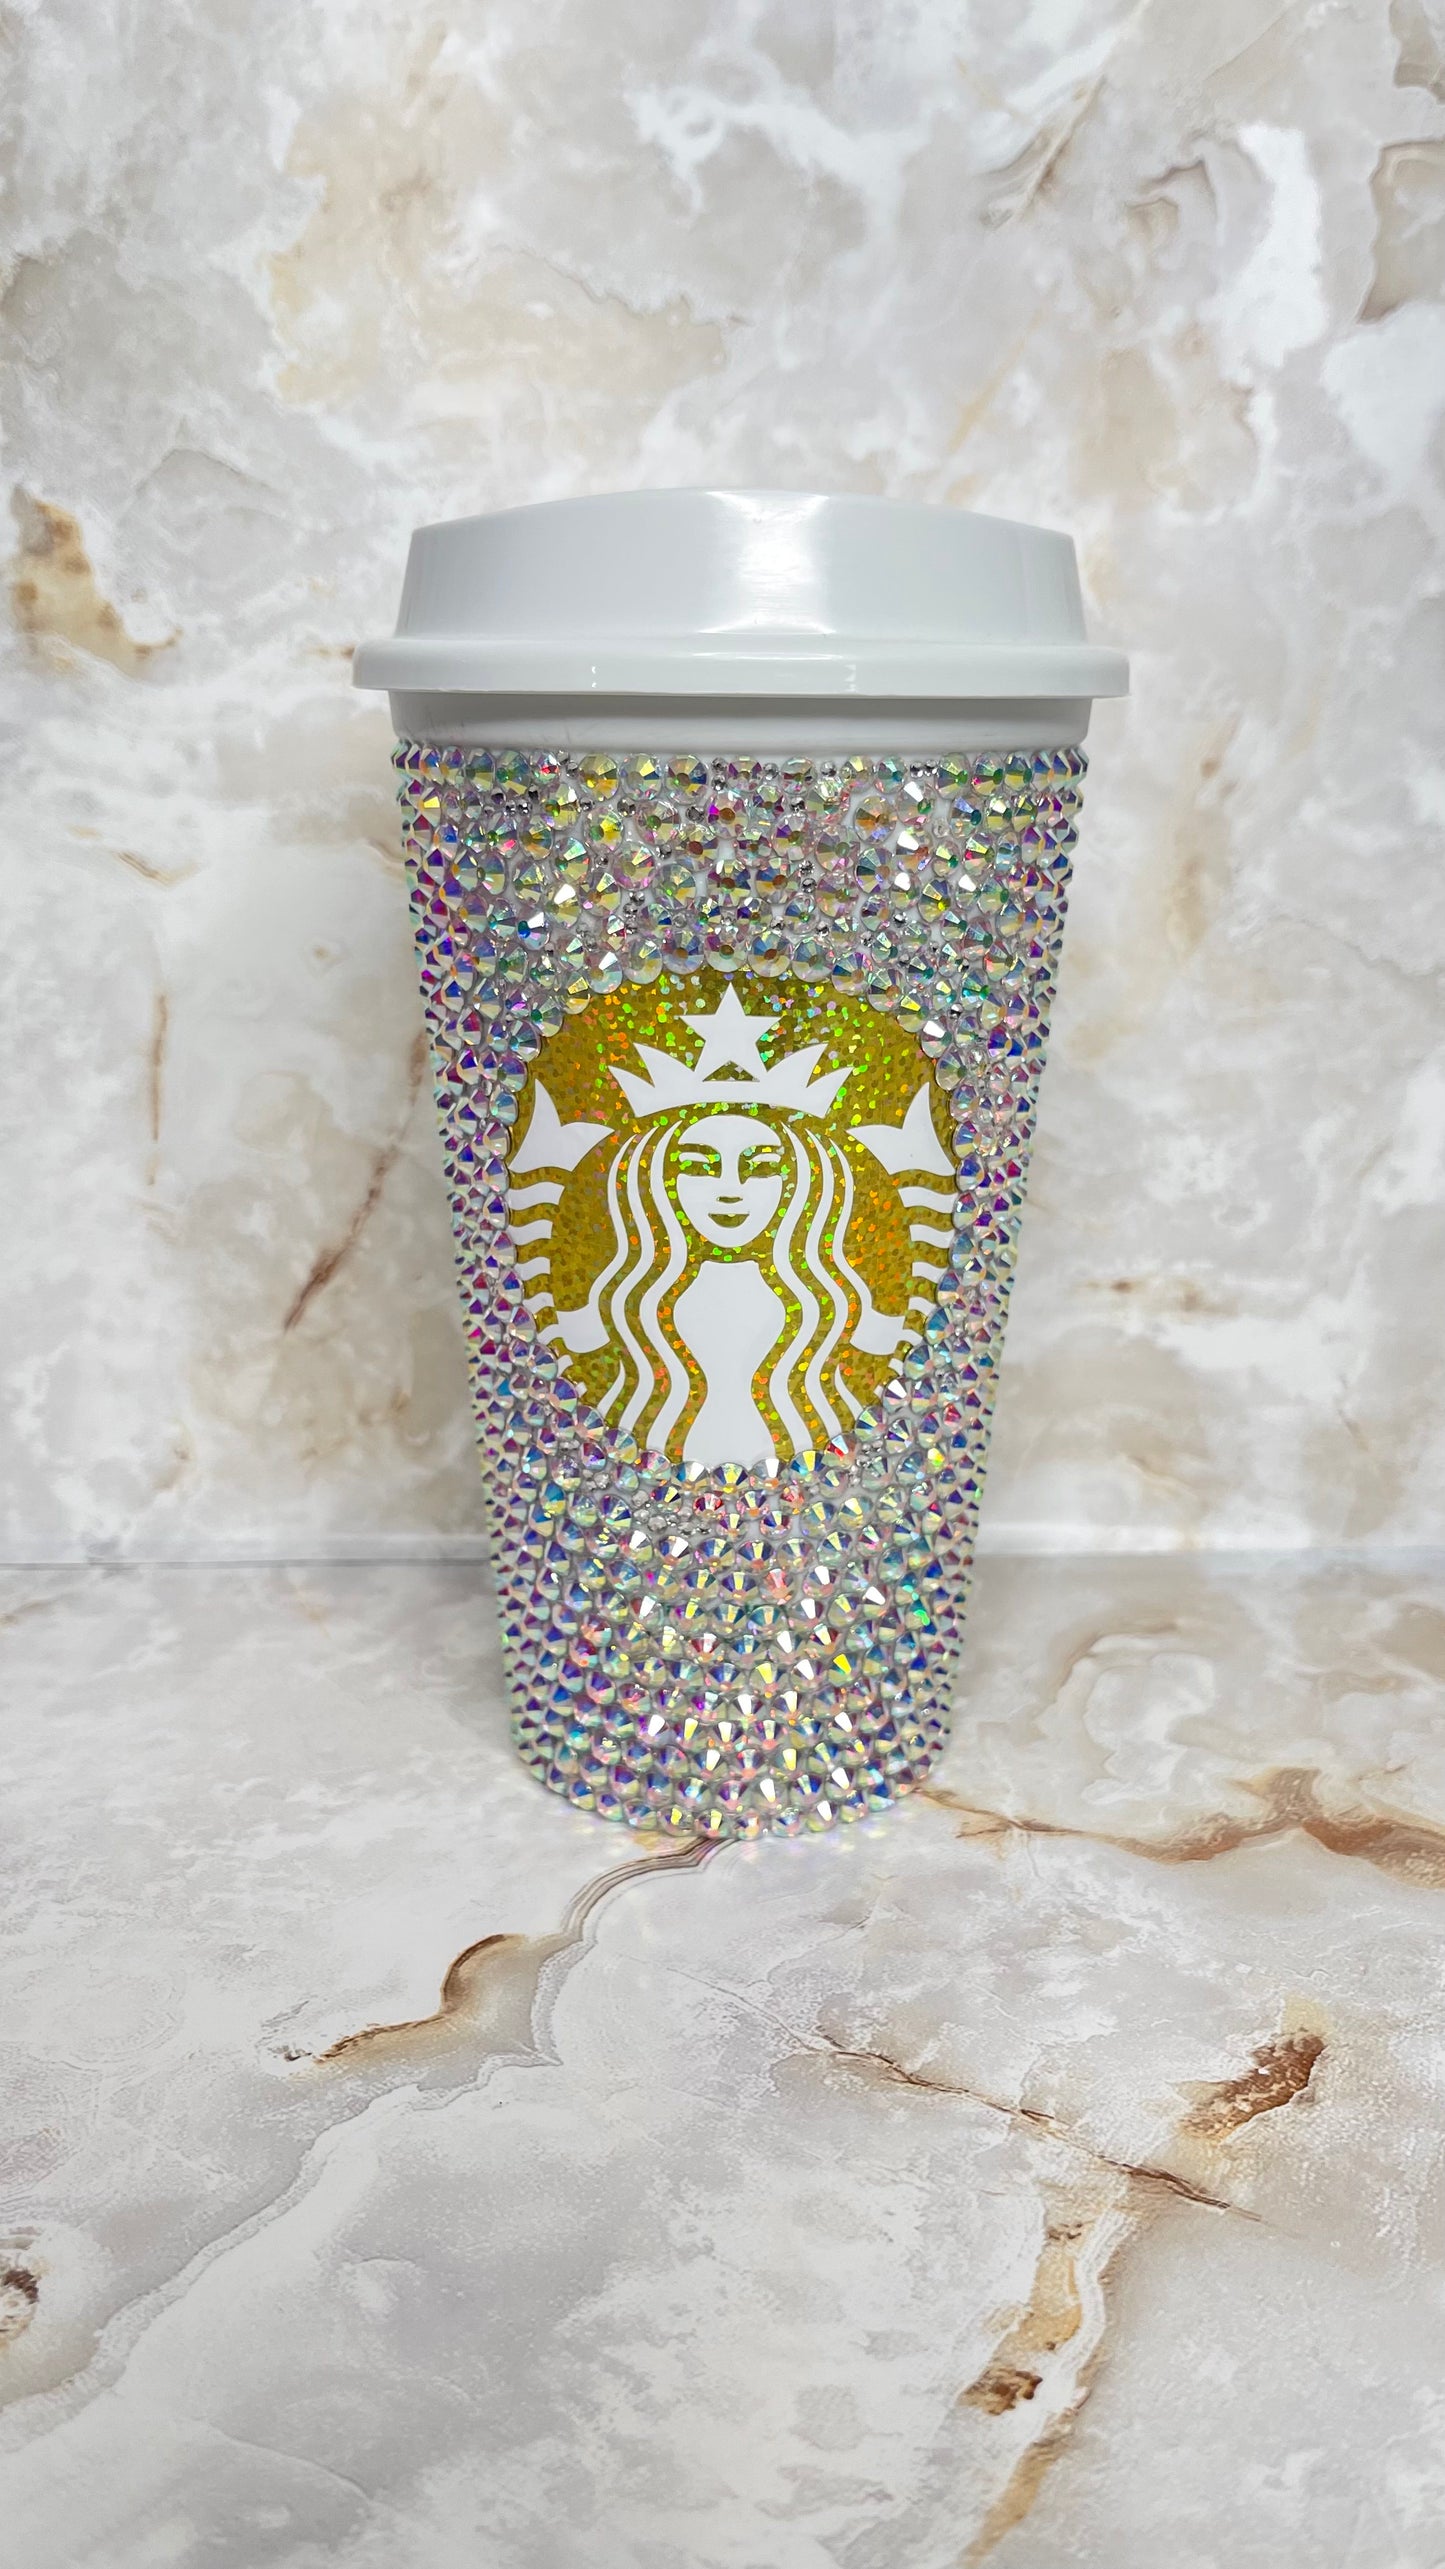 Starbucks Hot Cup 